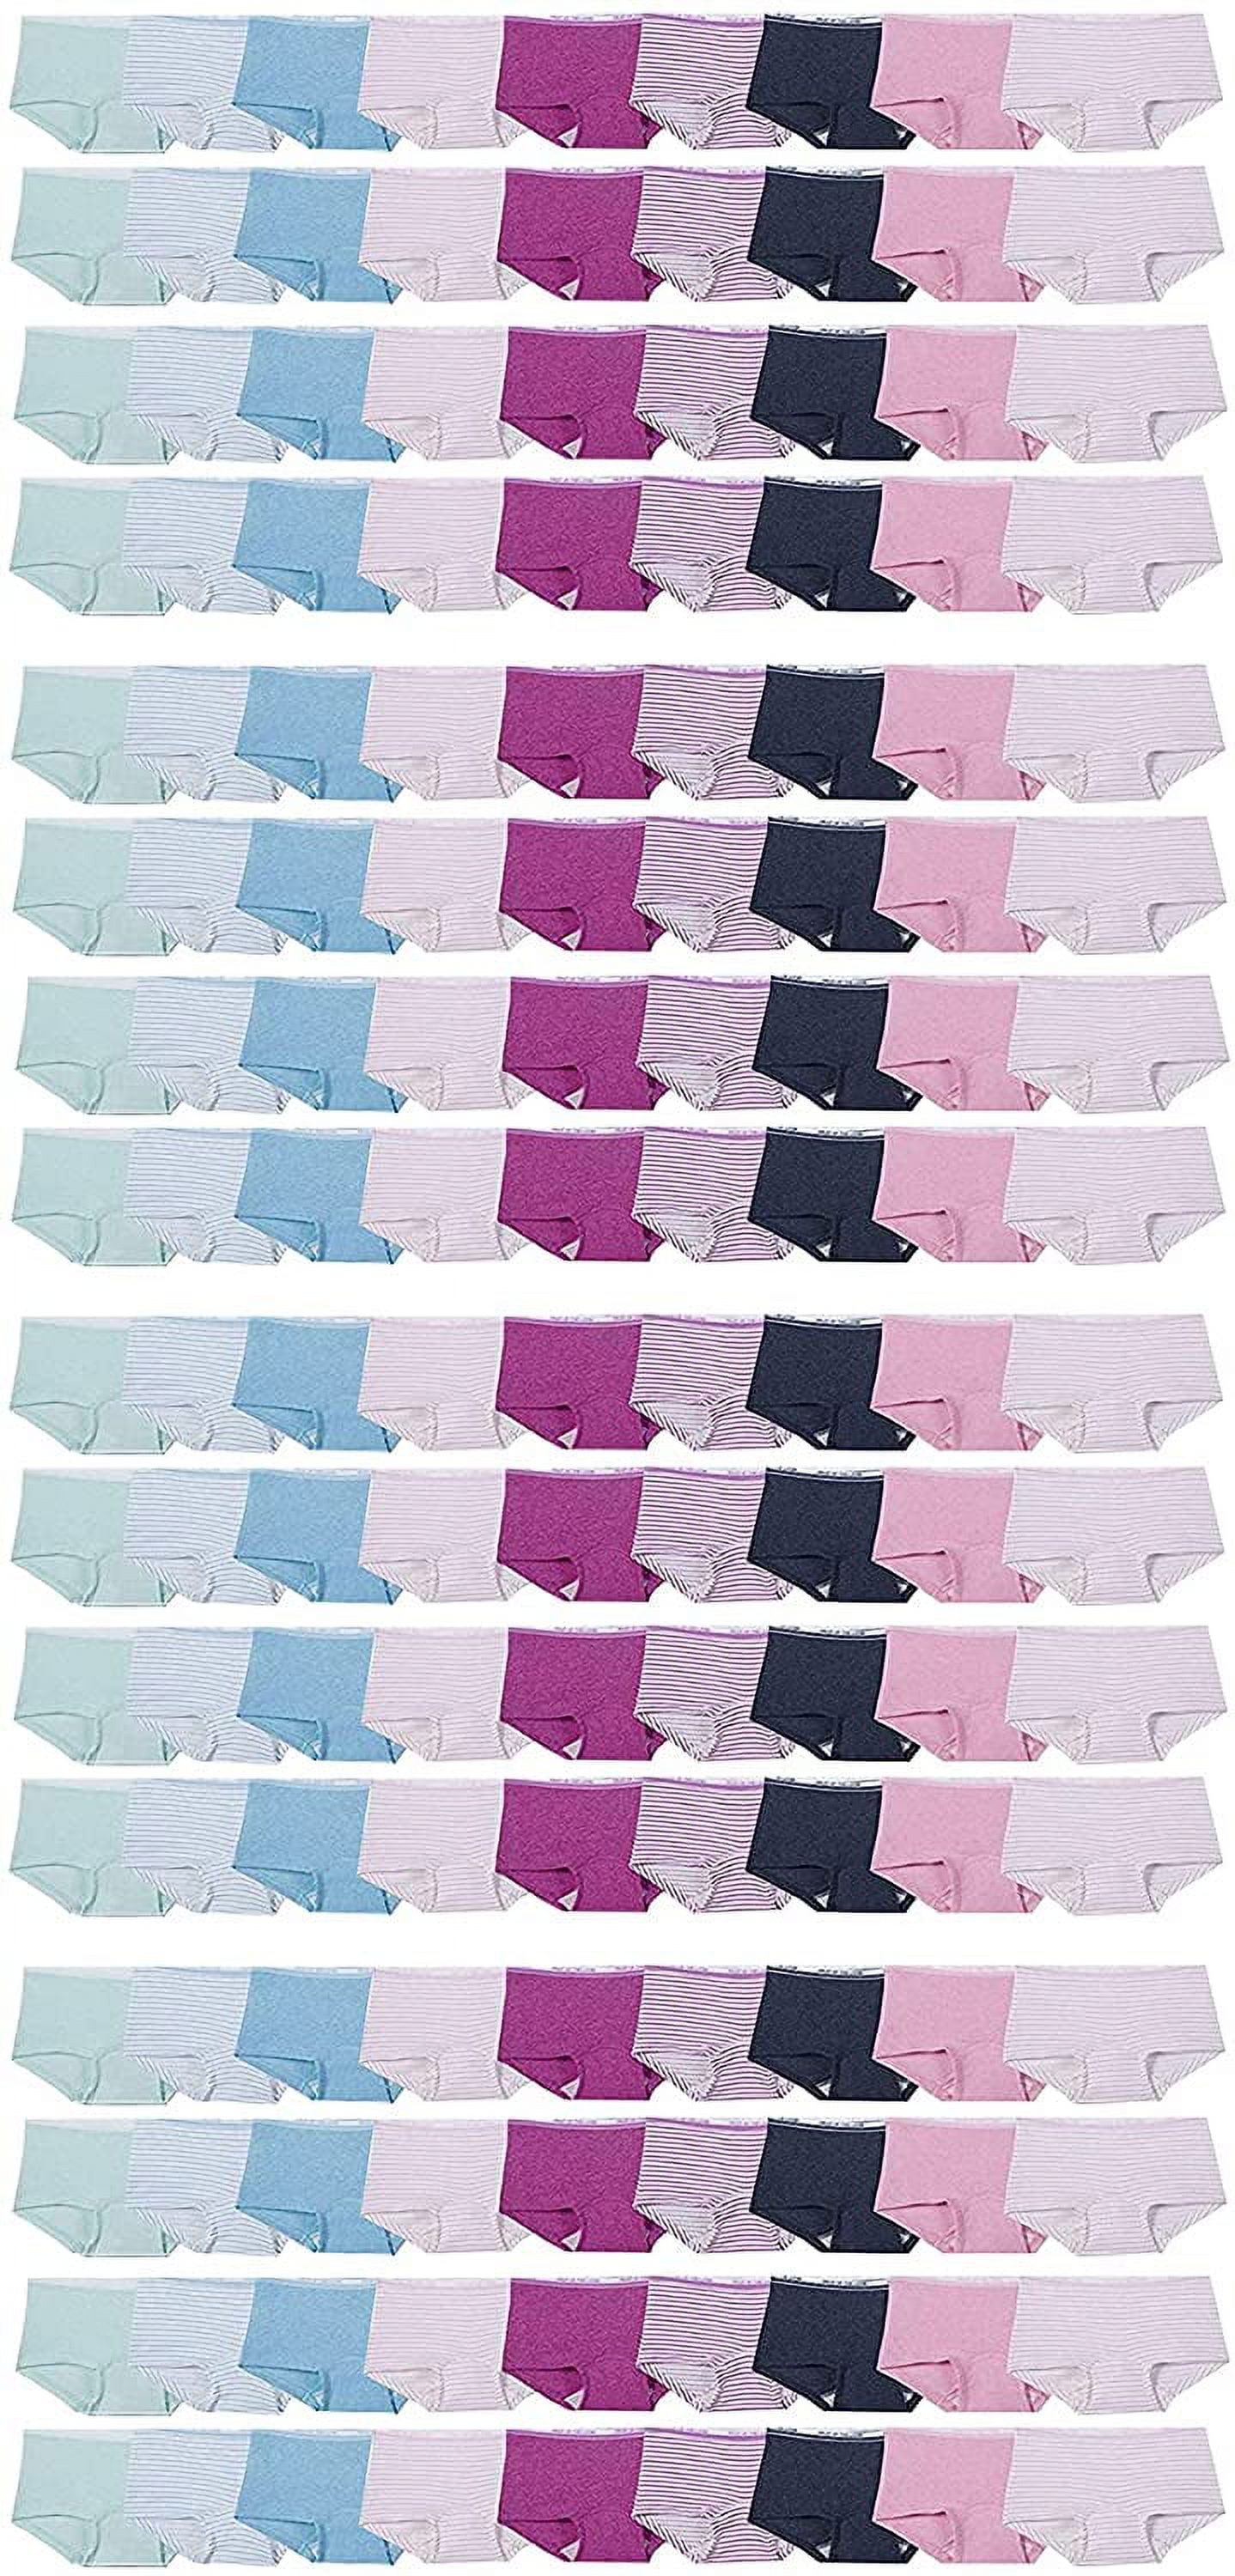 Yacht & Smith 144 Pieces of Bulk Girls Cotton Panties Underwear